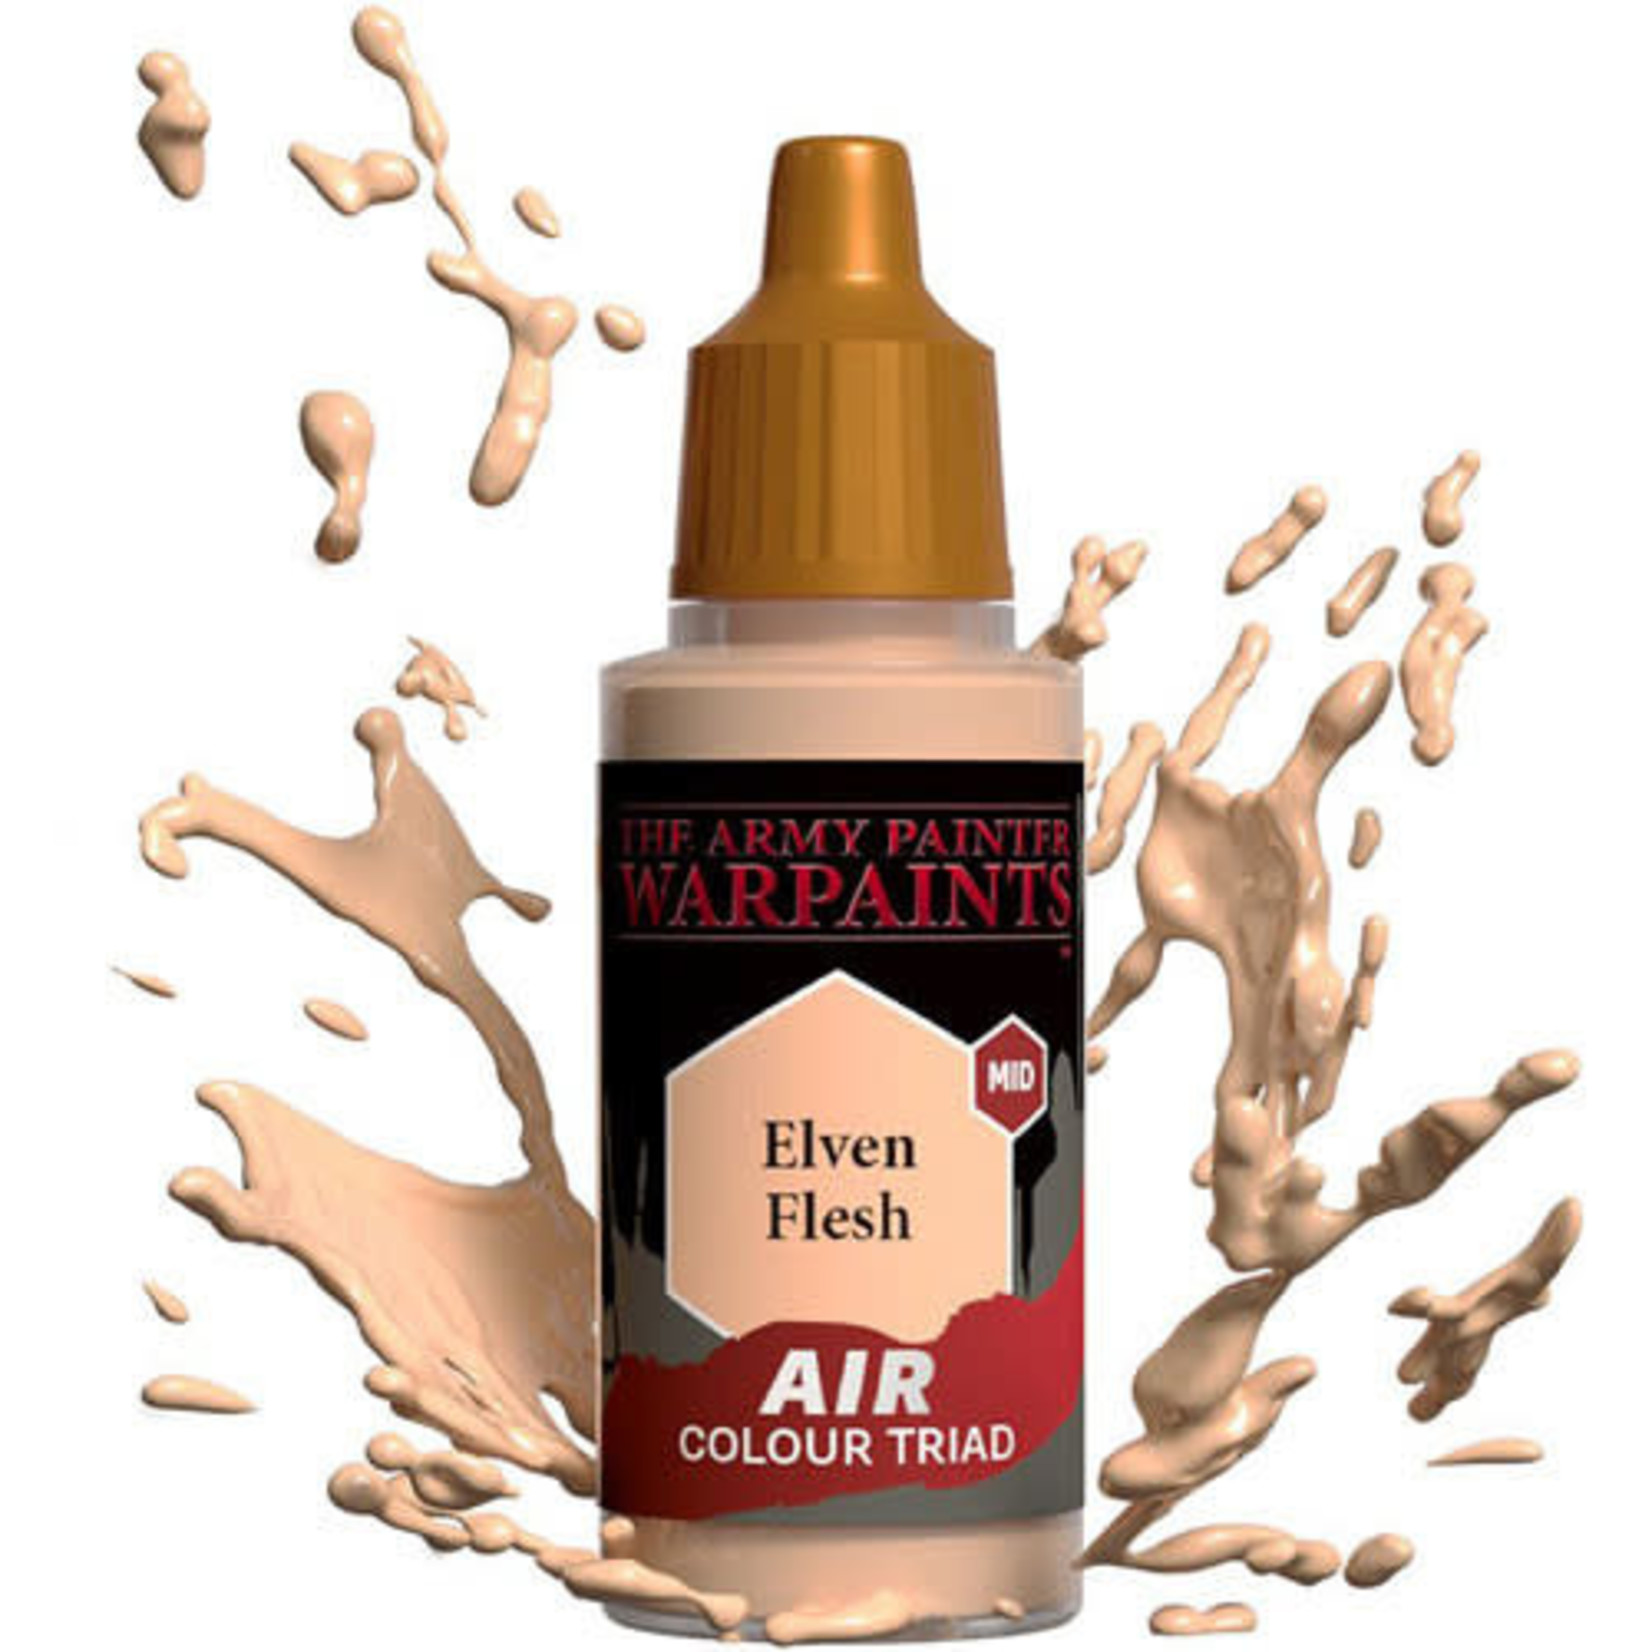 Army Painter Warpaints Air: Elven Flesh 18ml